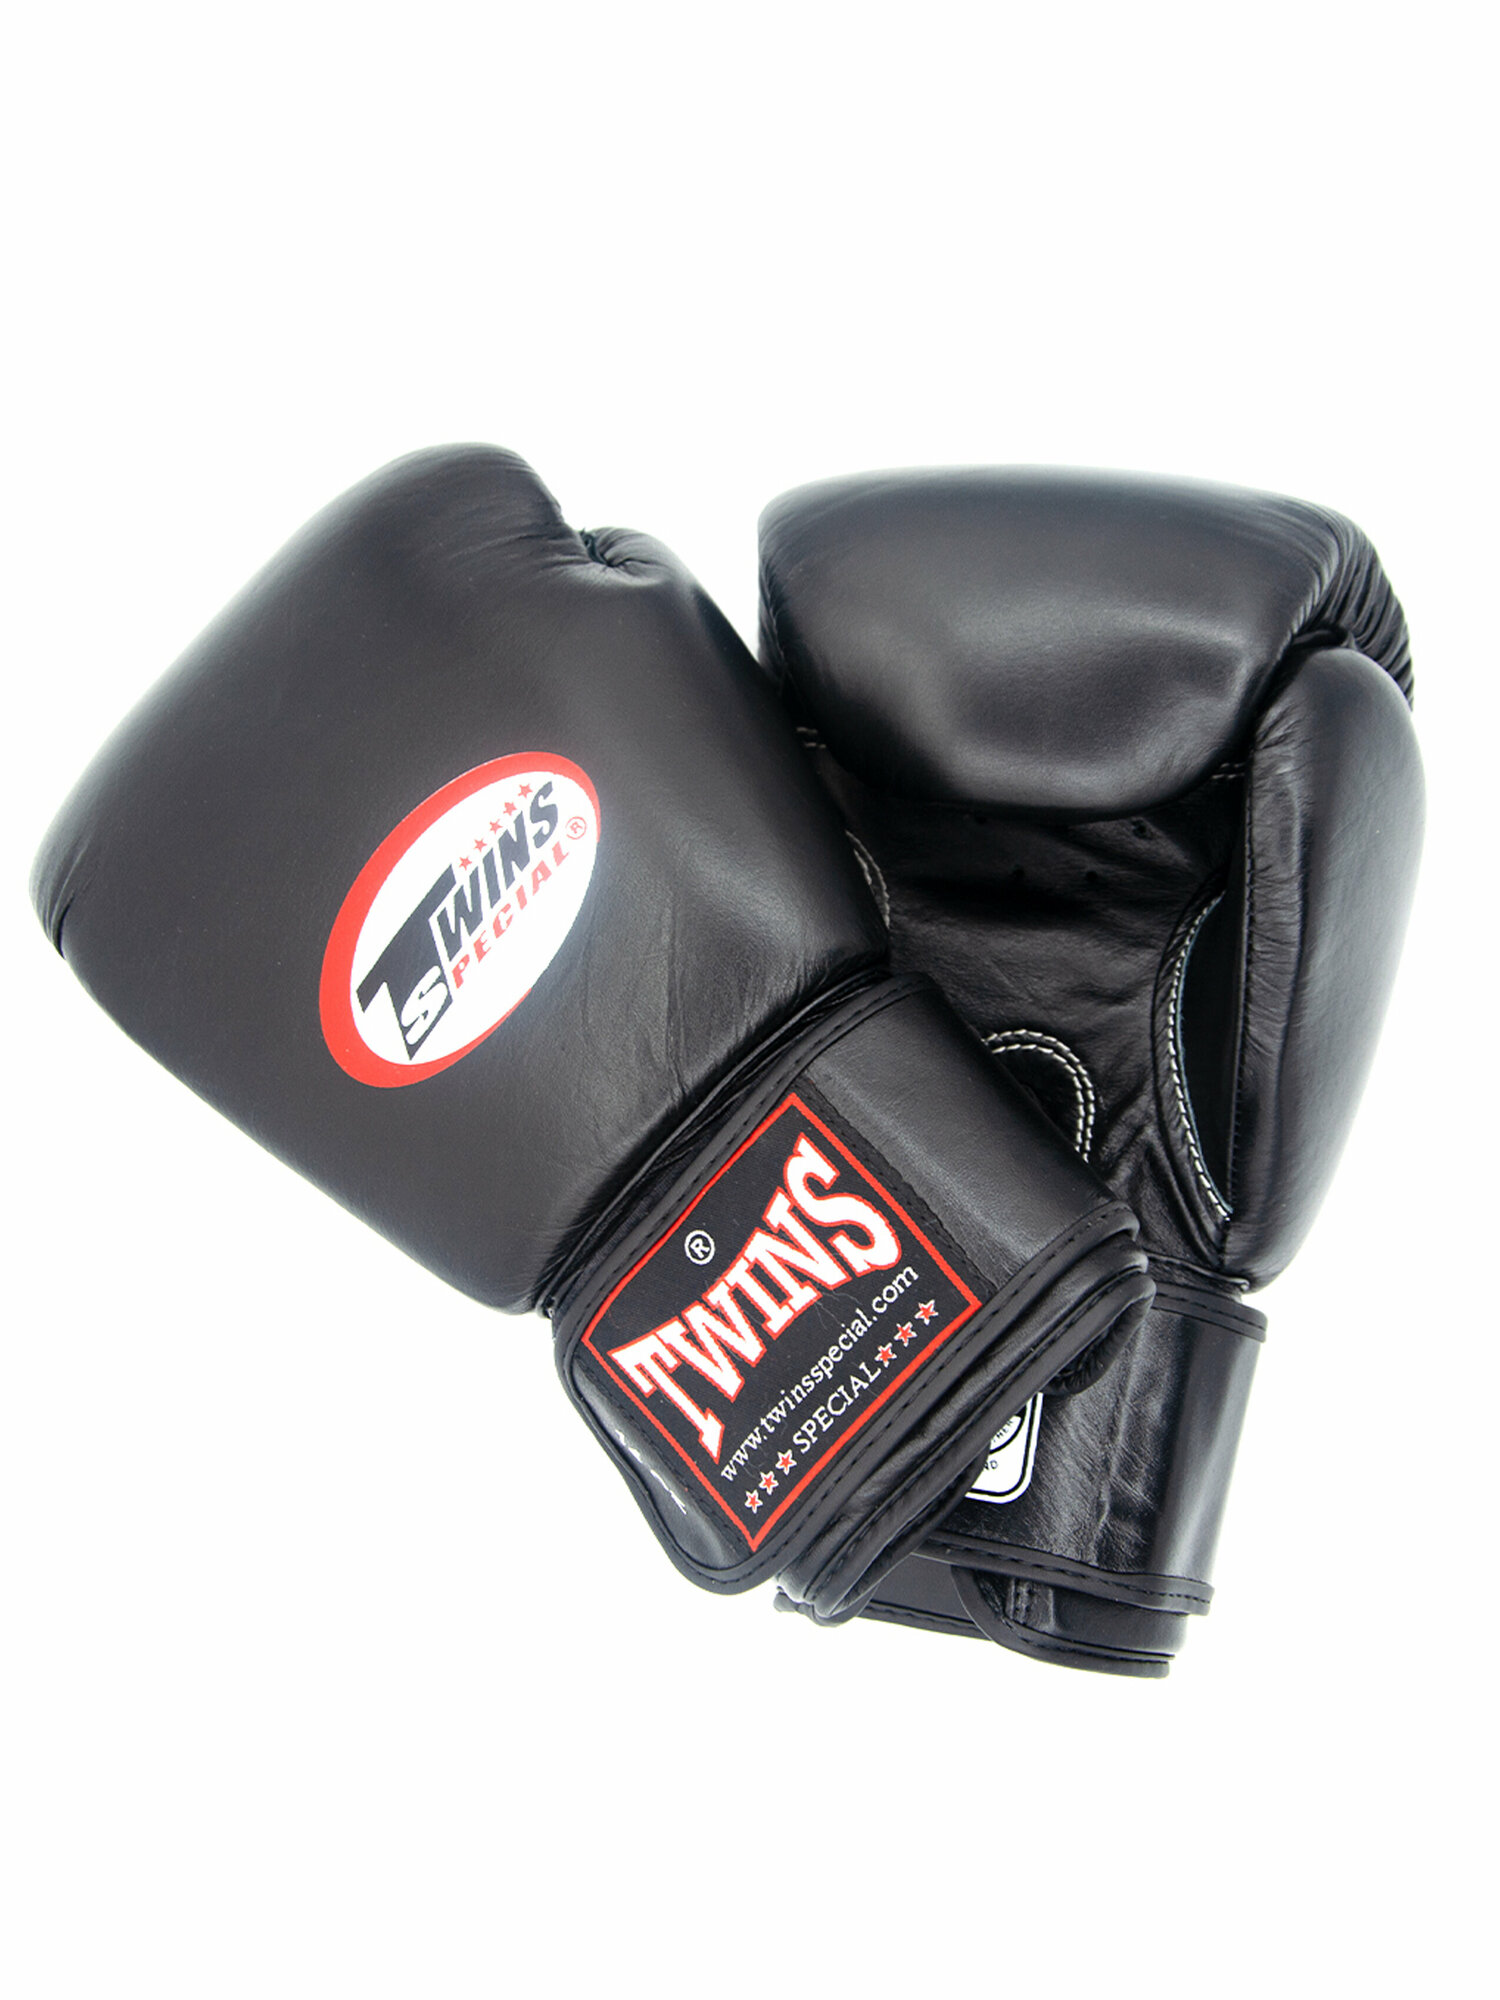 Боксерские перчатки Twins Special BGVL-3, black-8oz